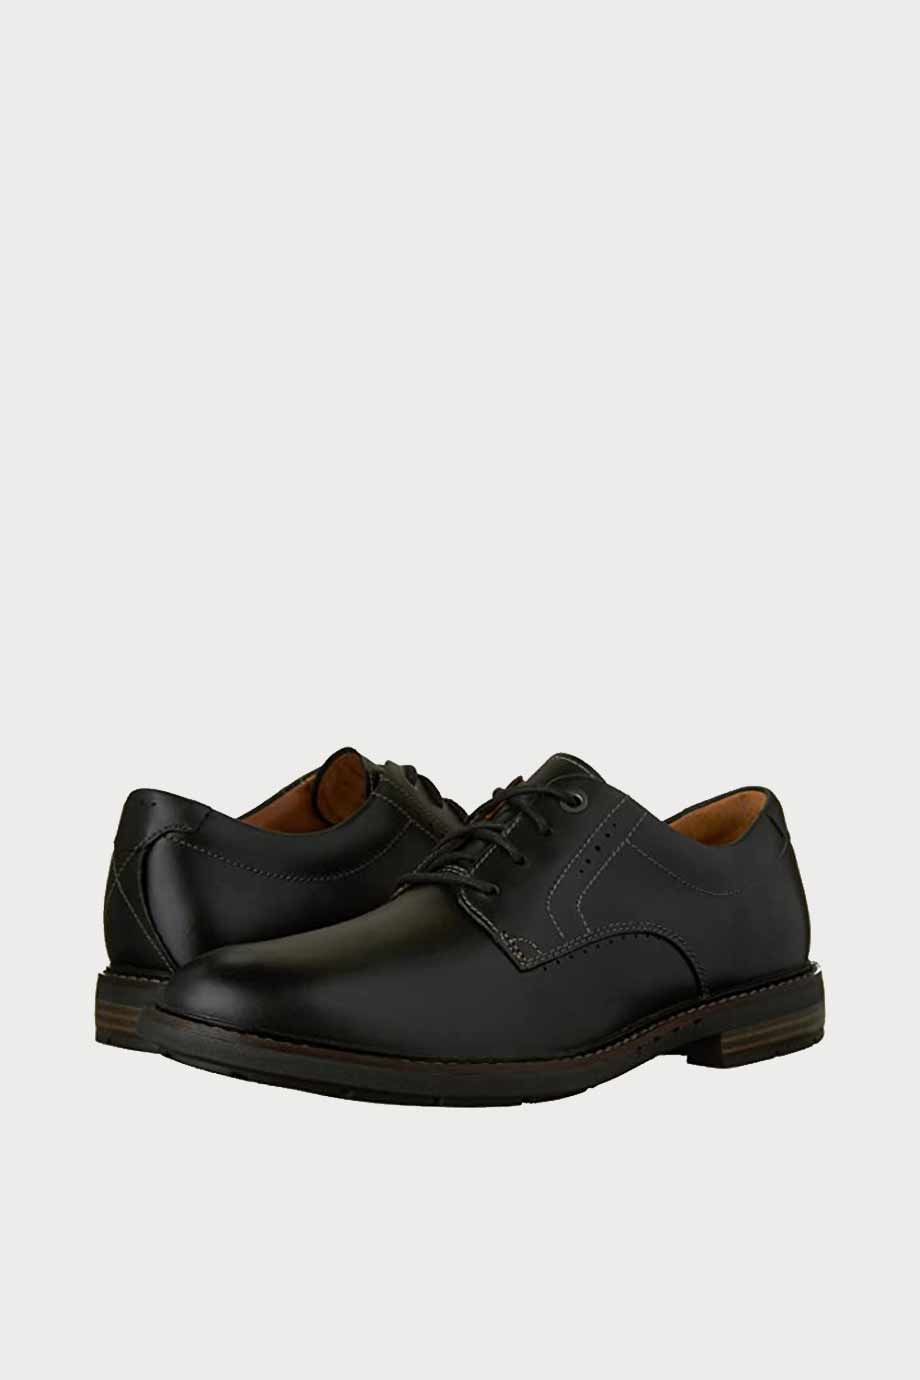 spiridoula metheniti shoes xalkida p Unelott Plain clarks black leather 3